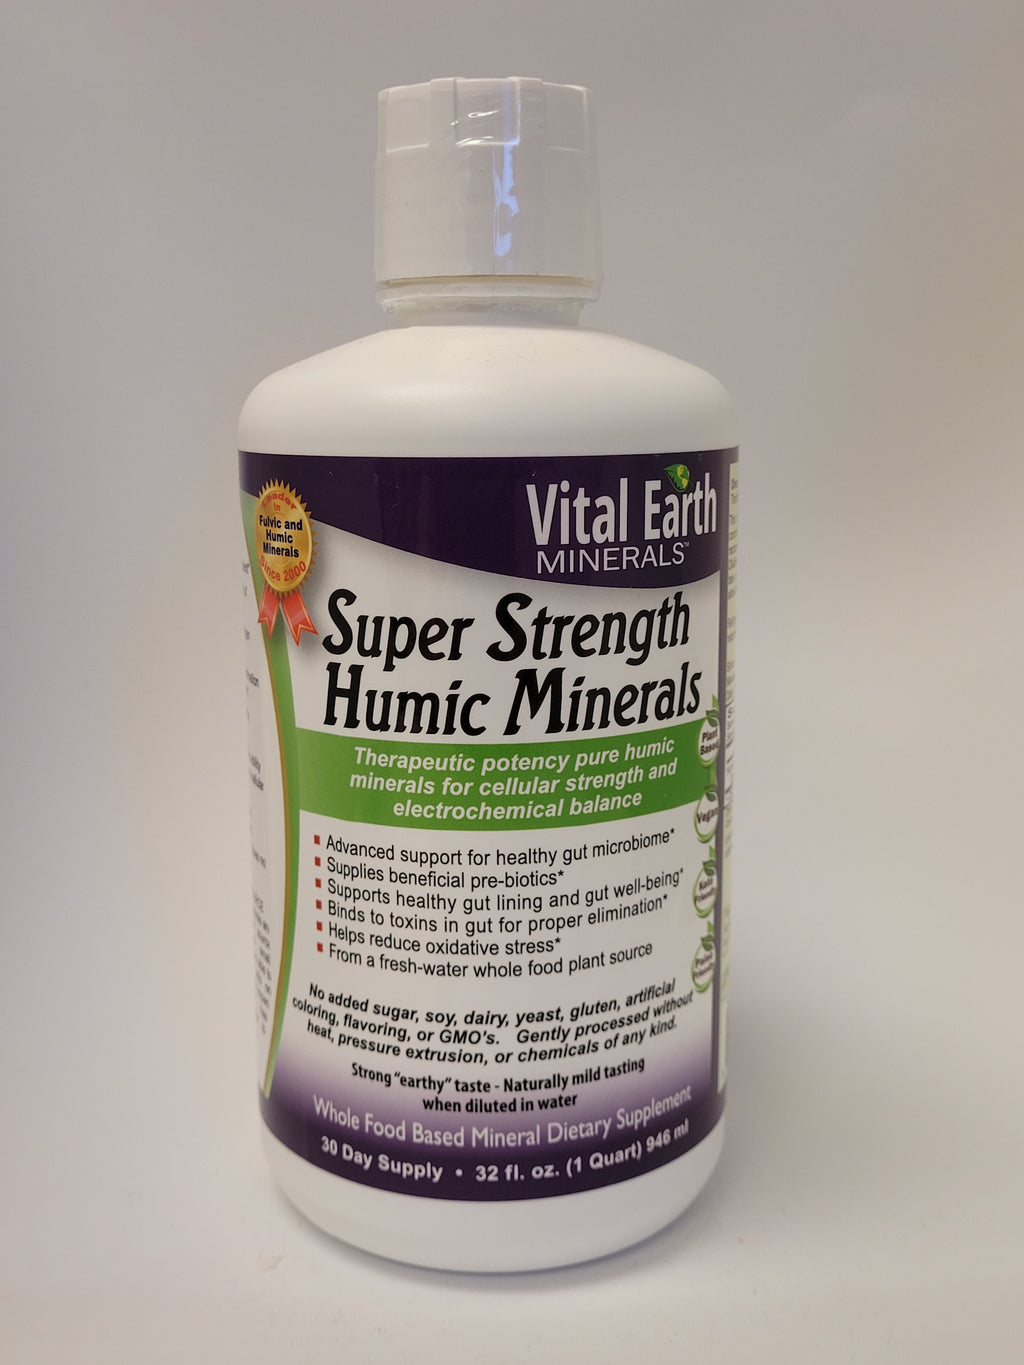 Super Strength Humic Minerals